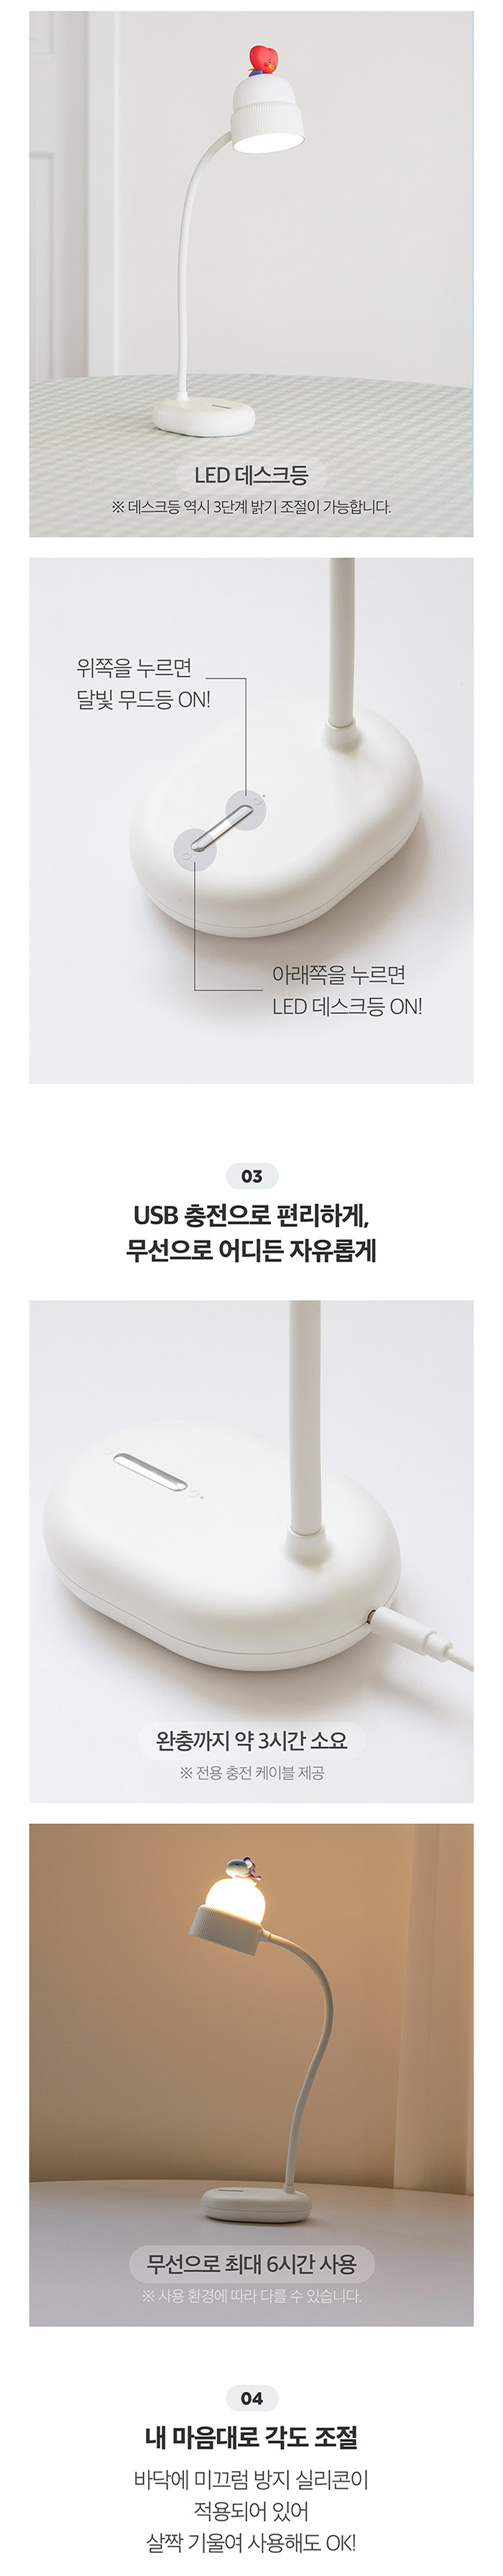 BT21] BTS. Line Friends Collaboration - Baby Portable Mood Lamp